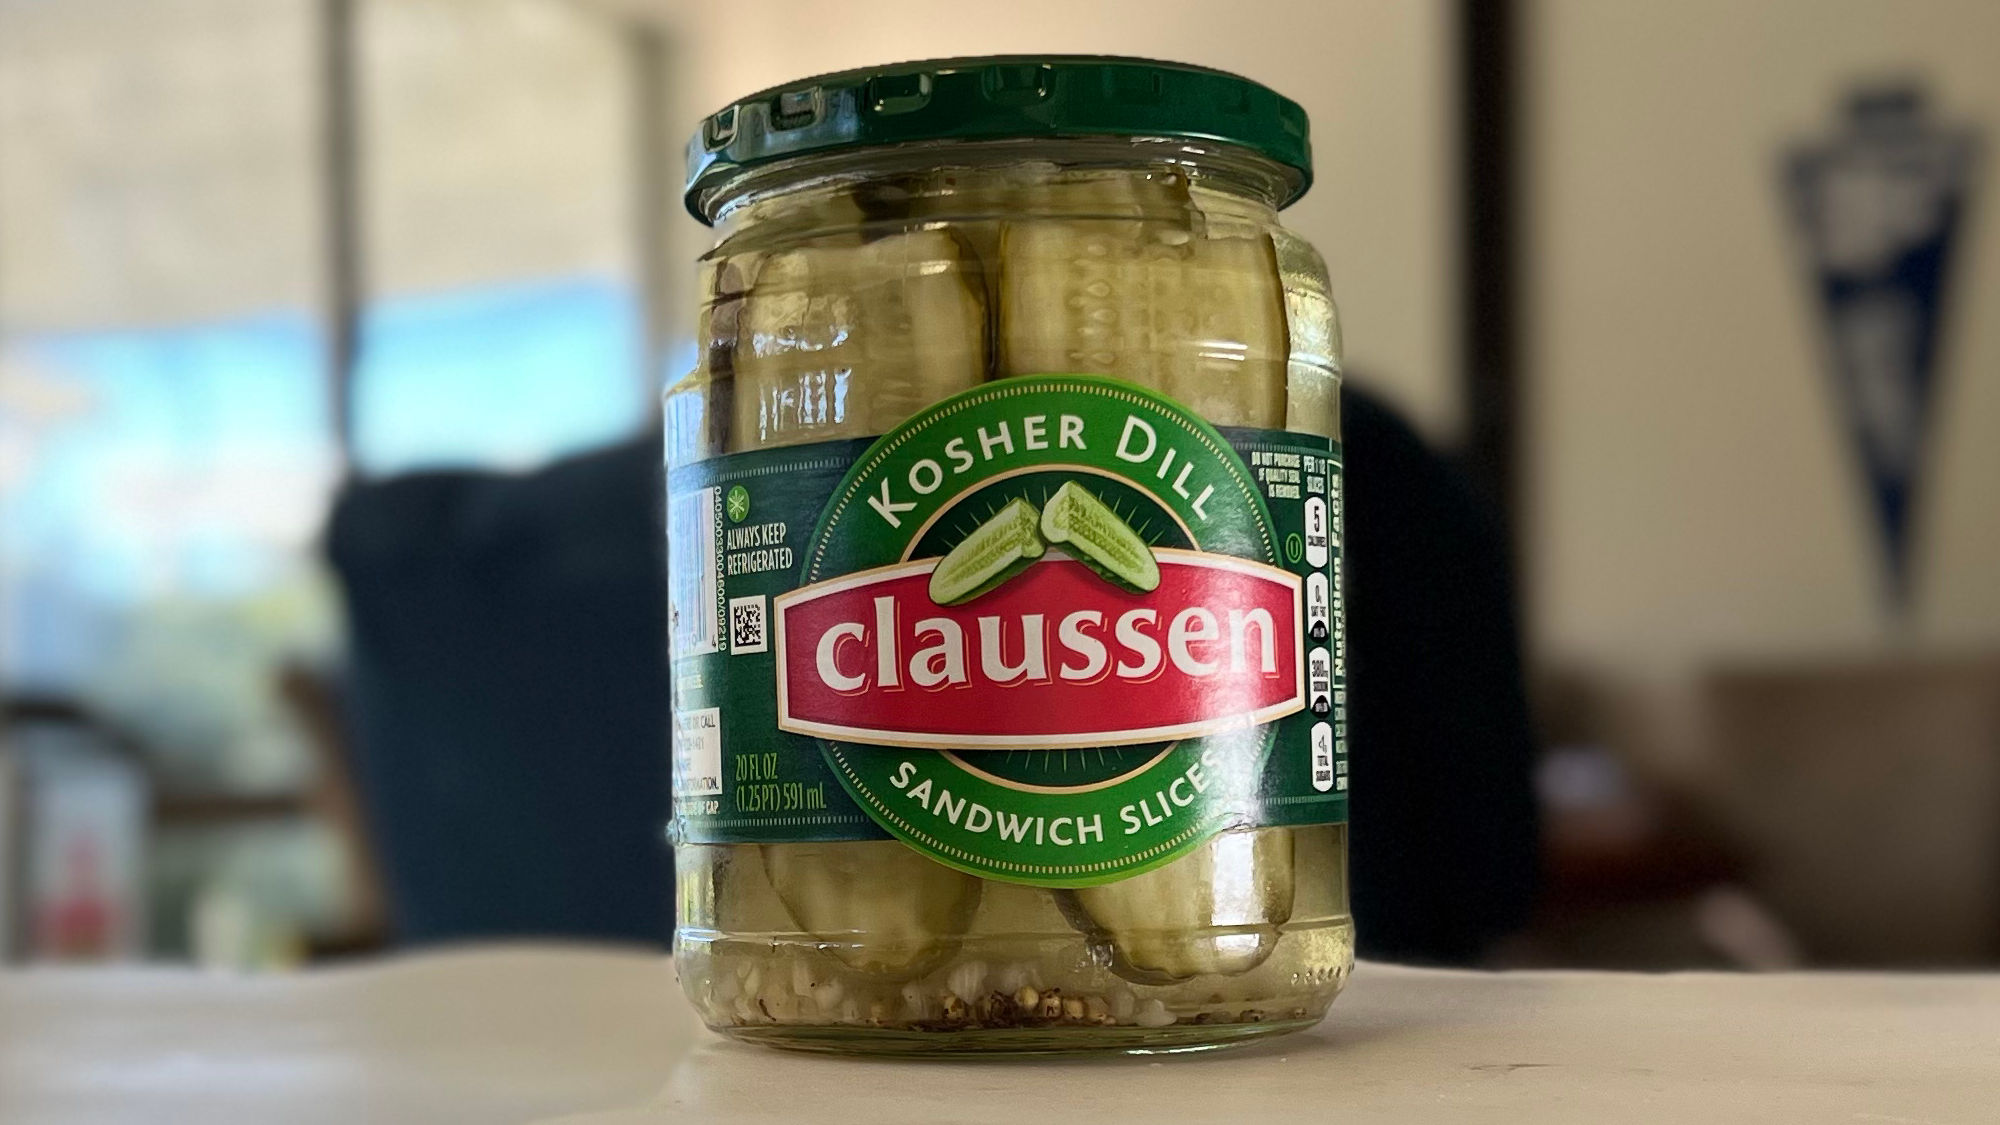 Claussen Dill Pickles Sandwich Slices